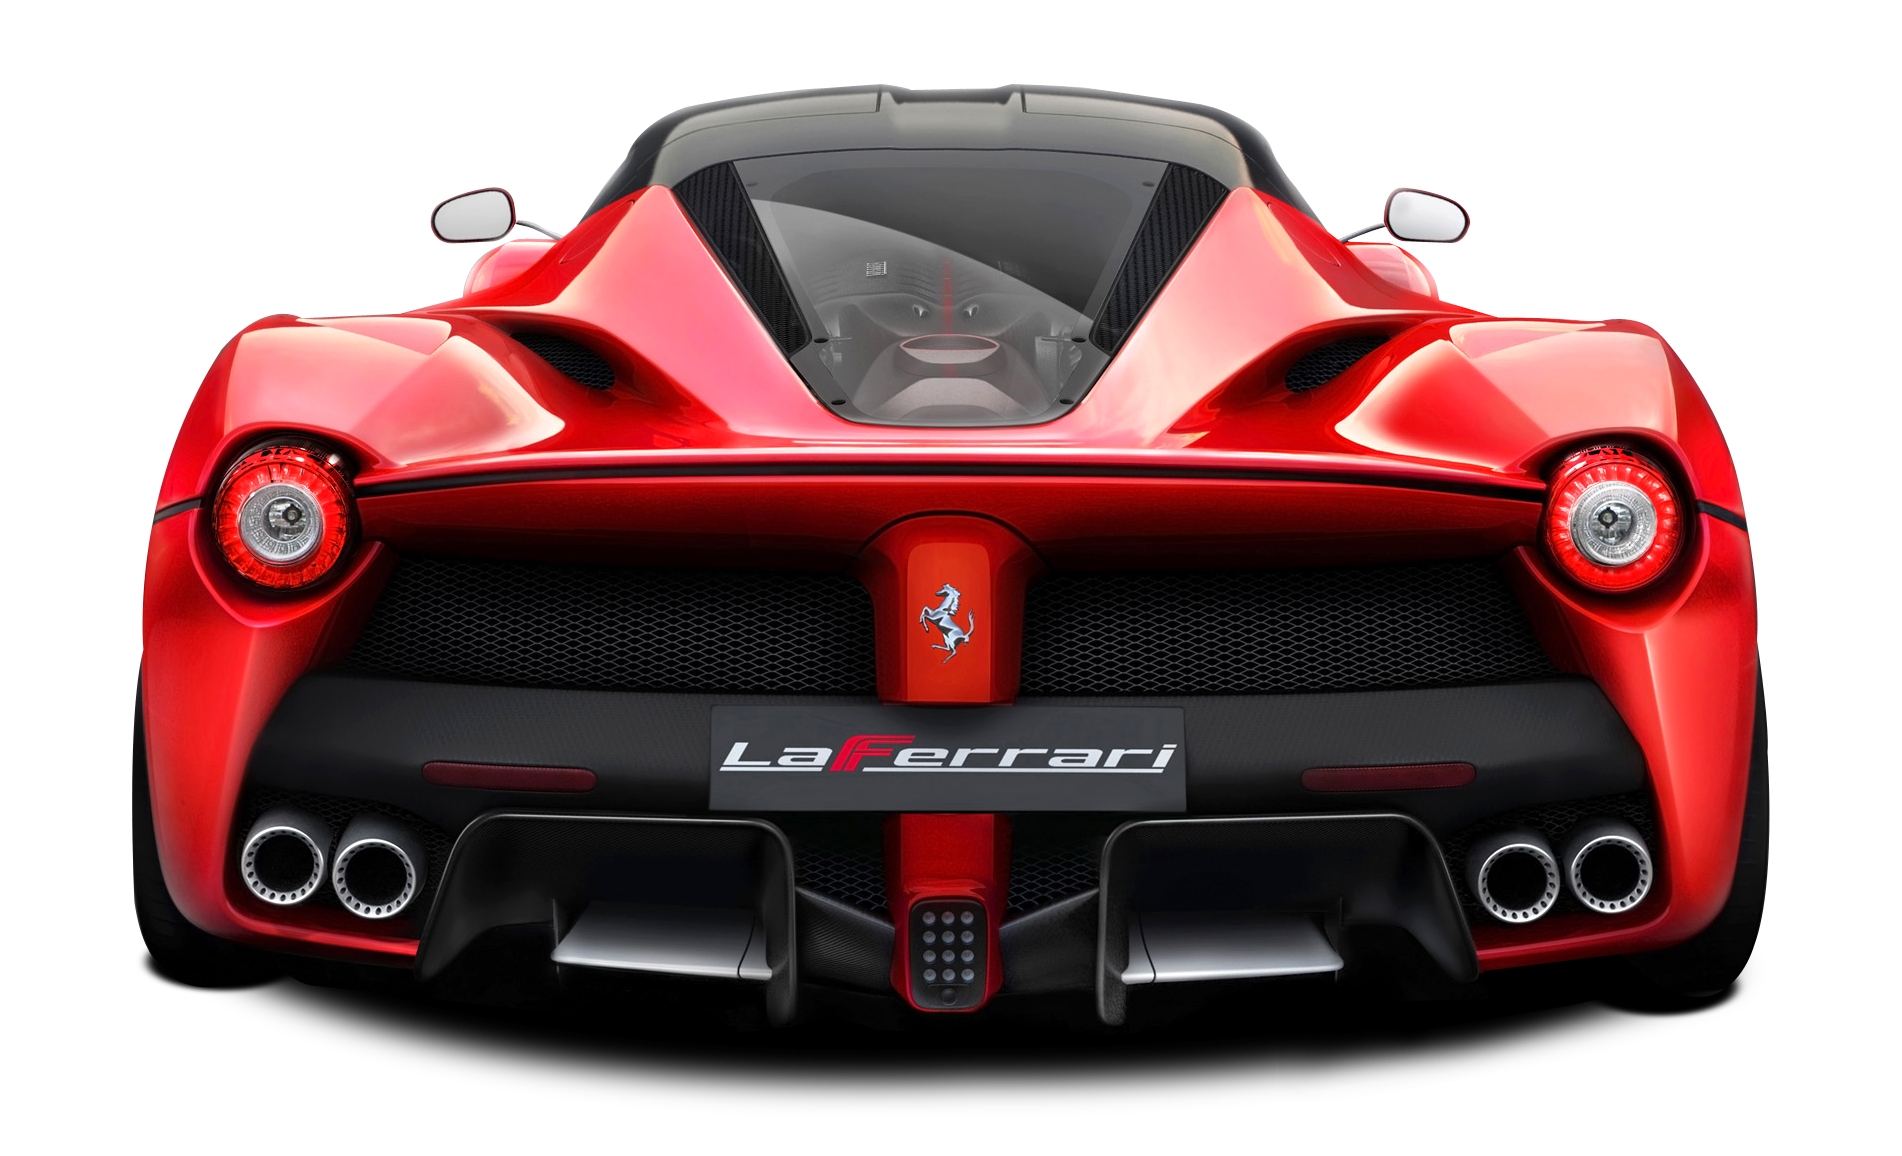 Ferrari LaFerrari Car